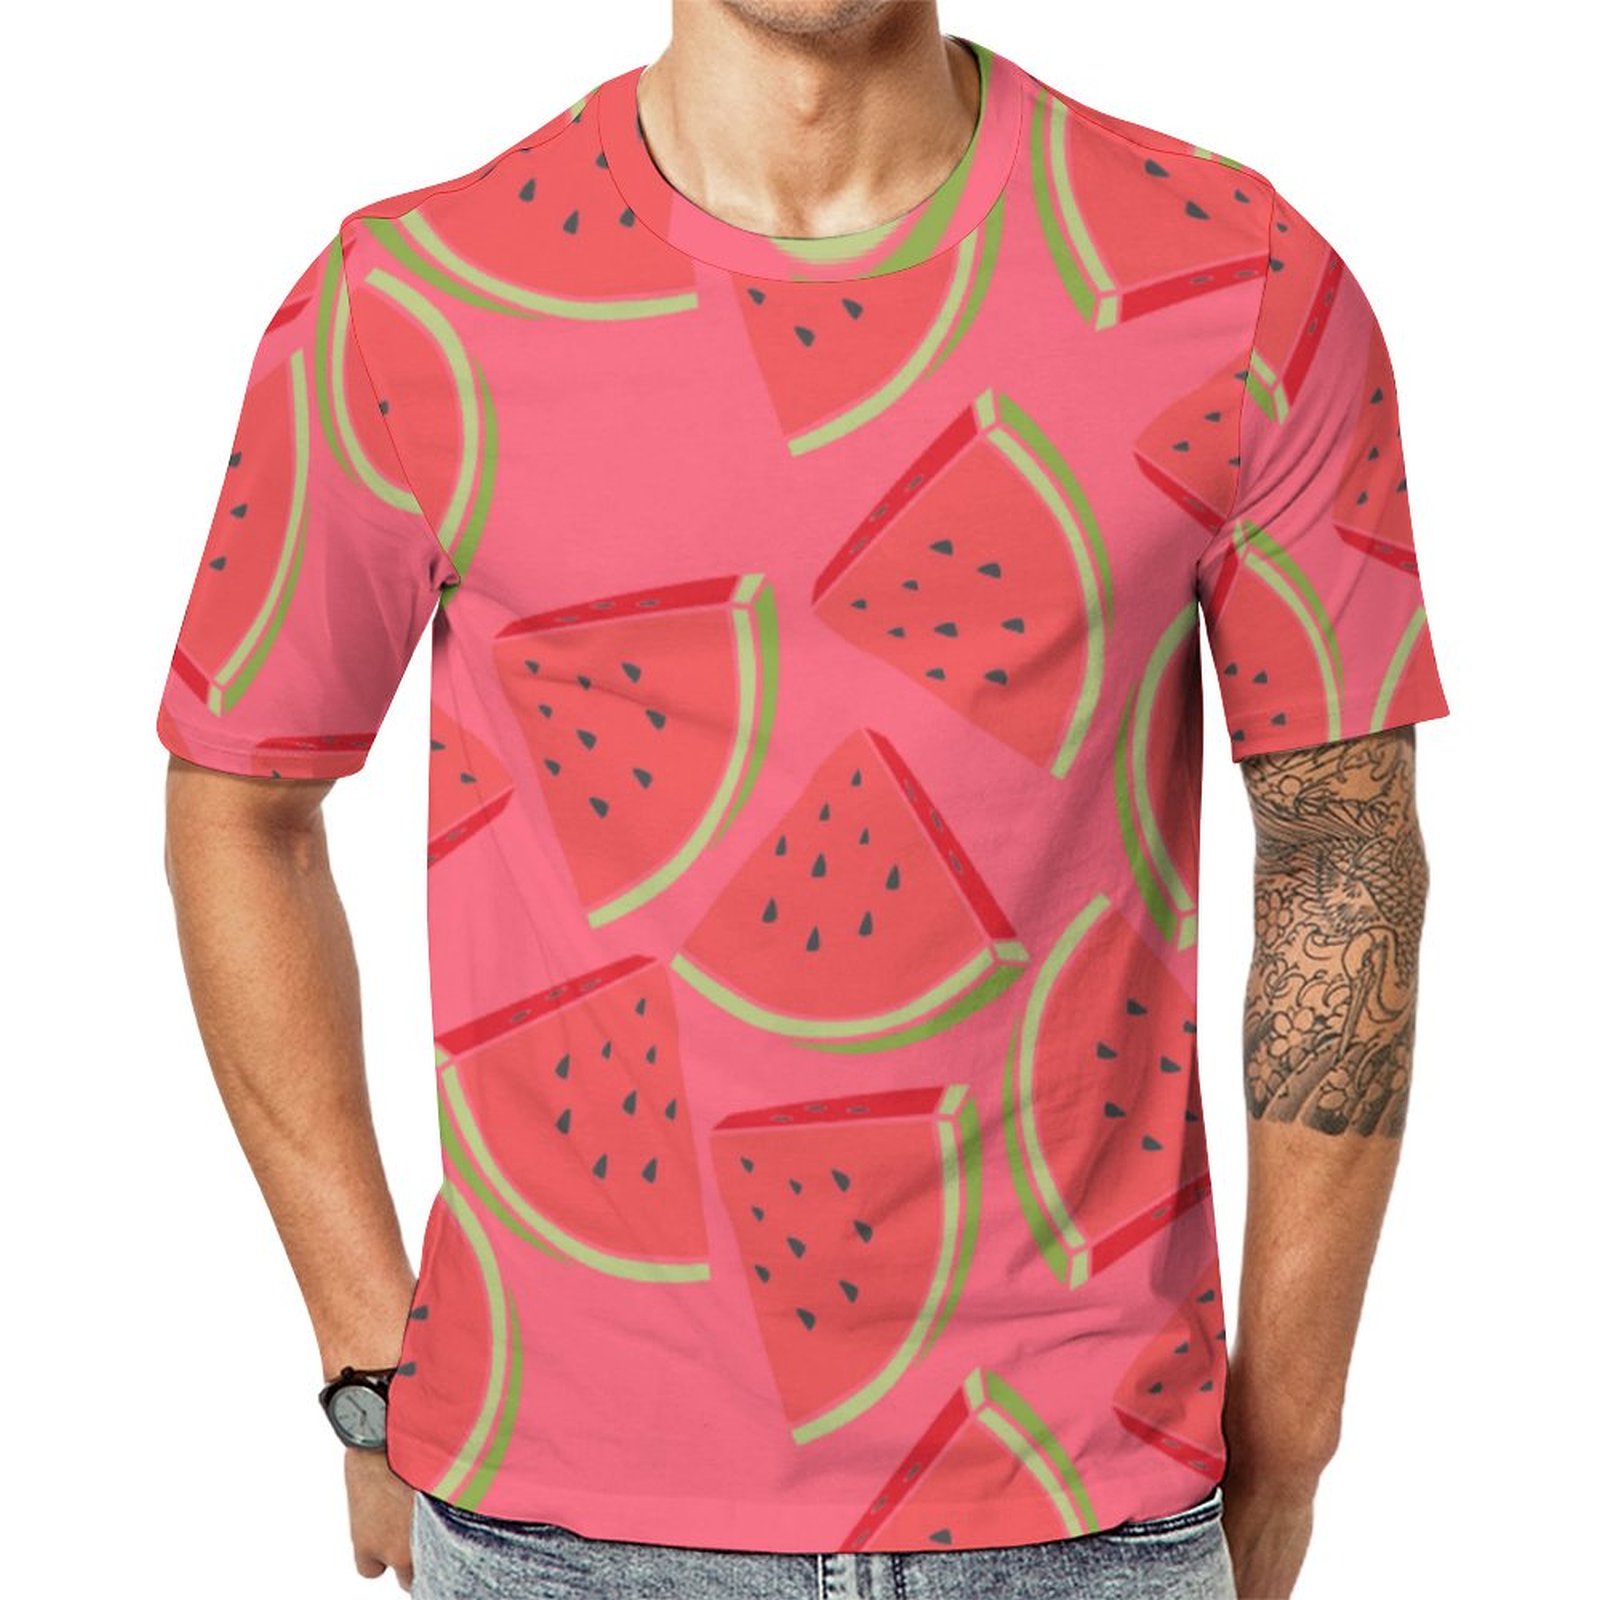 Elegant Red Watermelon Fruit Short Sleeve Print Unisex Tshirt Summer Casual Tees for Men and Women Coolcoshirts